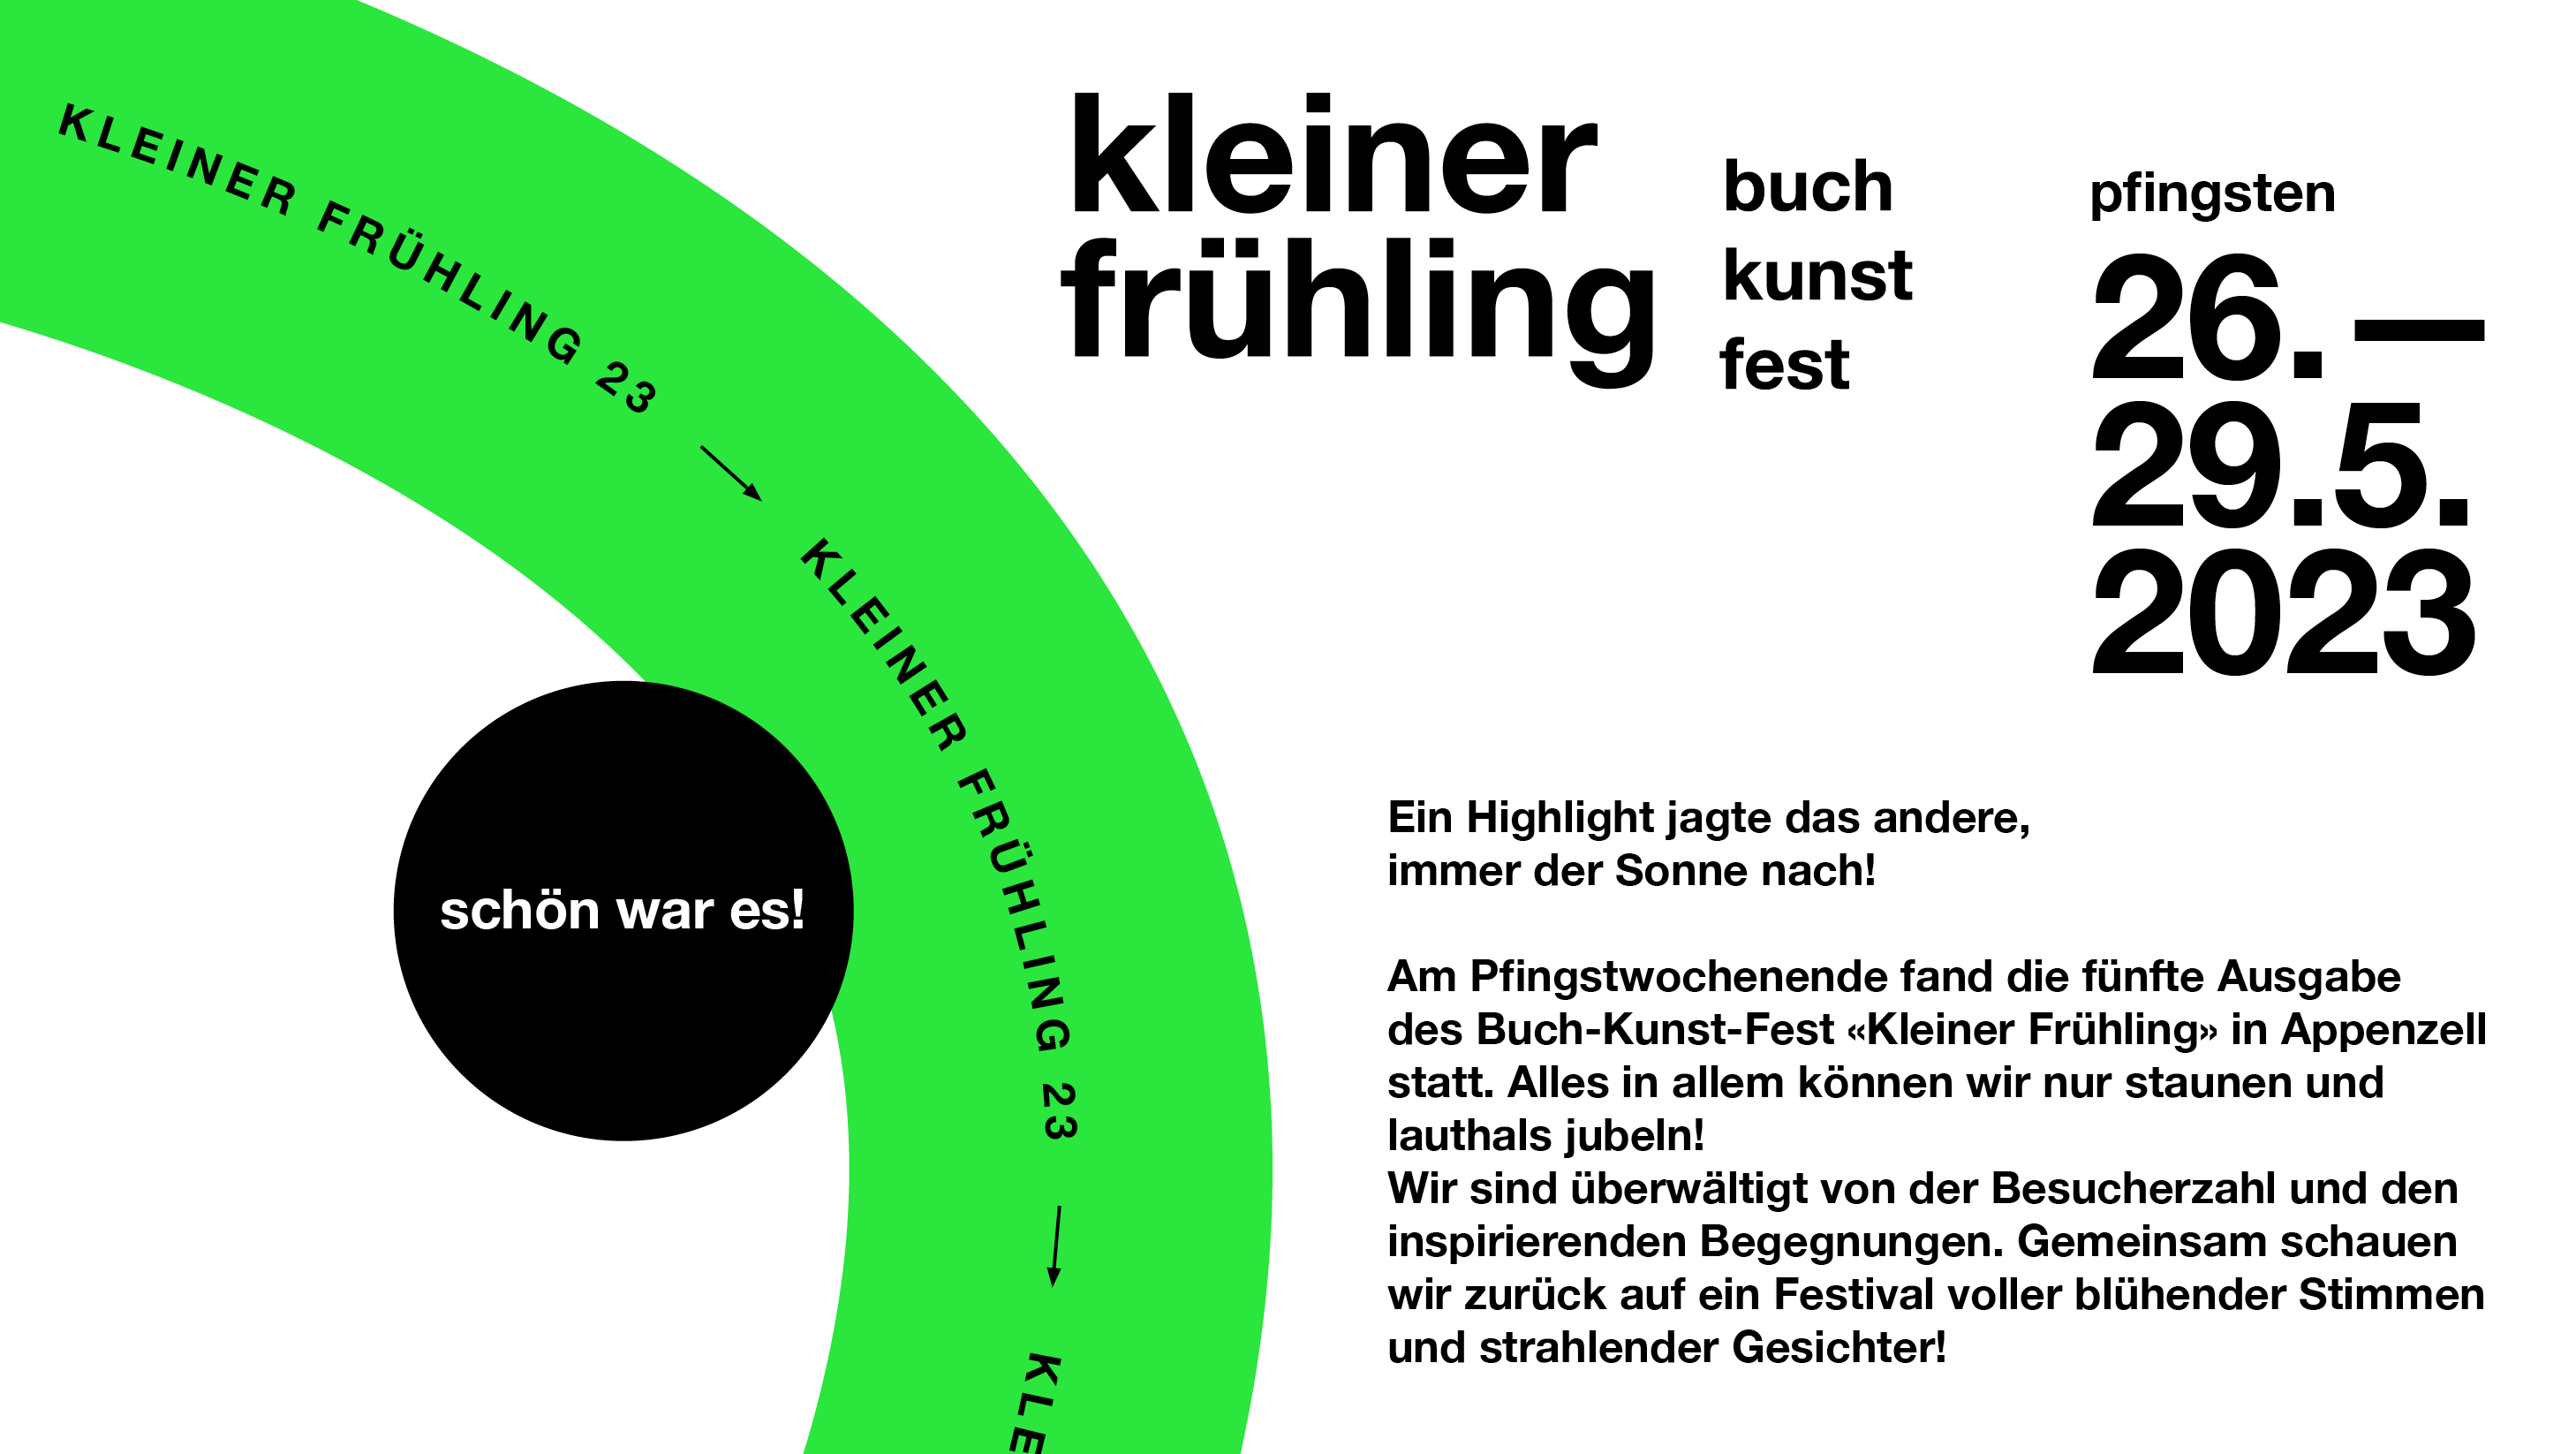 Save the Date – Kleiner Frühling 2023 in Appenzell